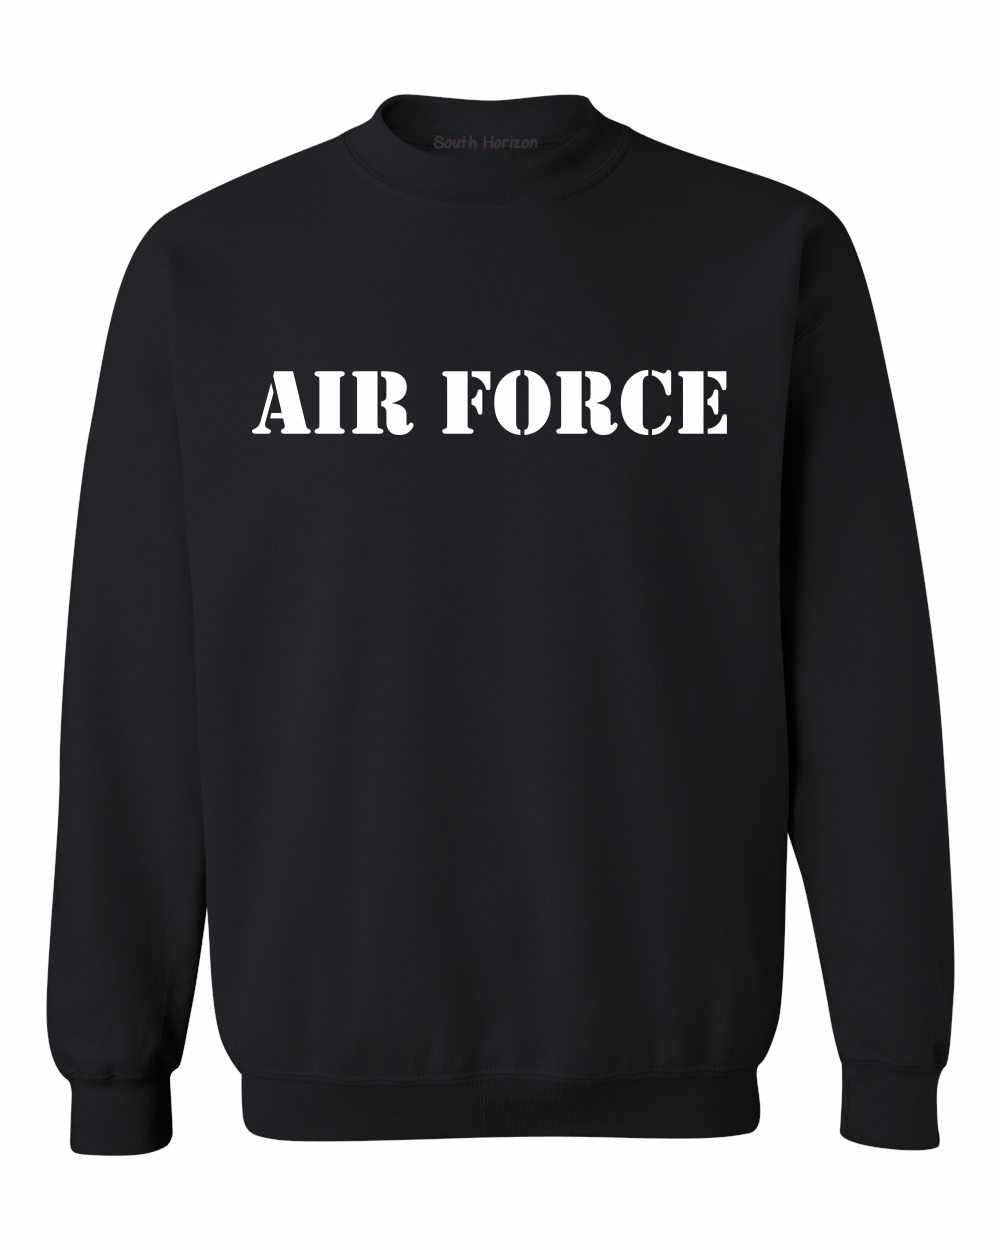 AIR FORCE on SweatShirt (#339-11)